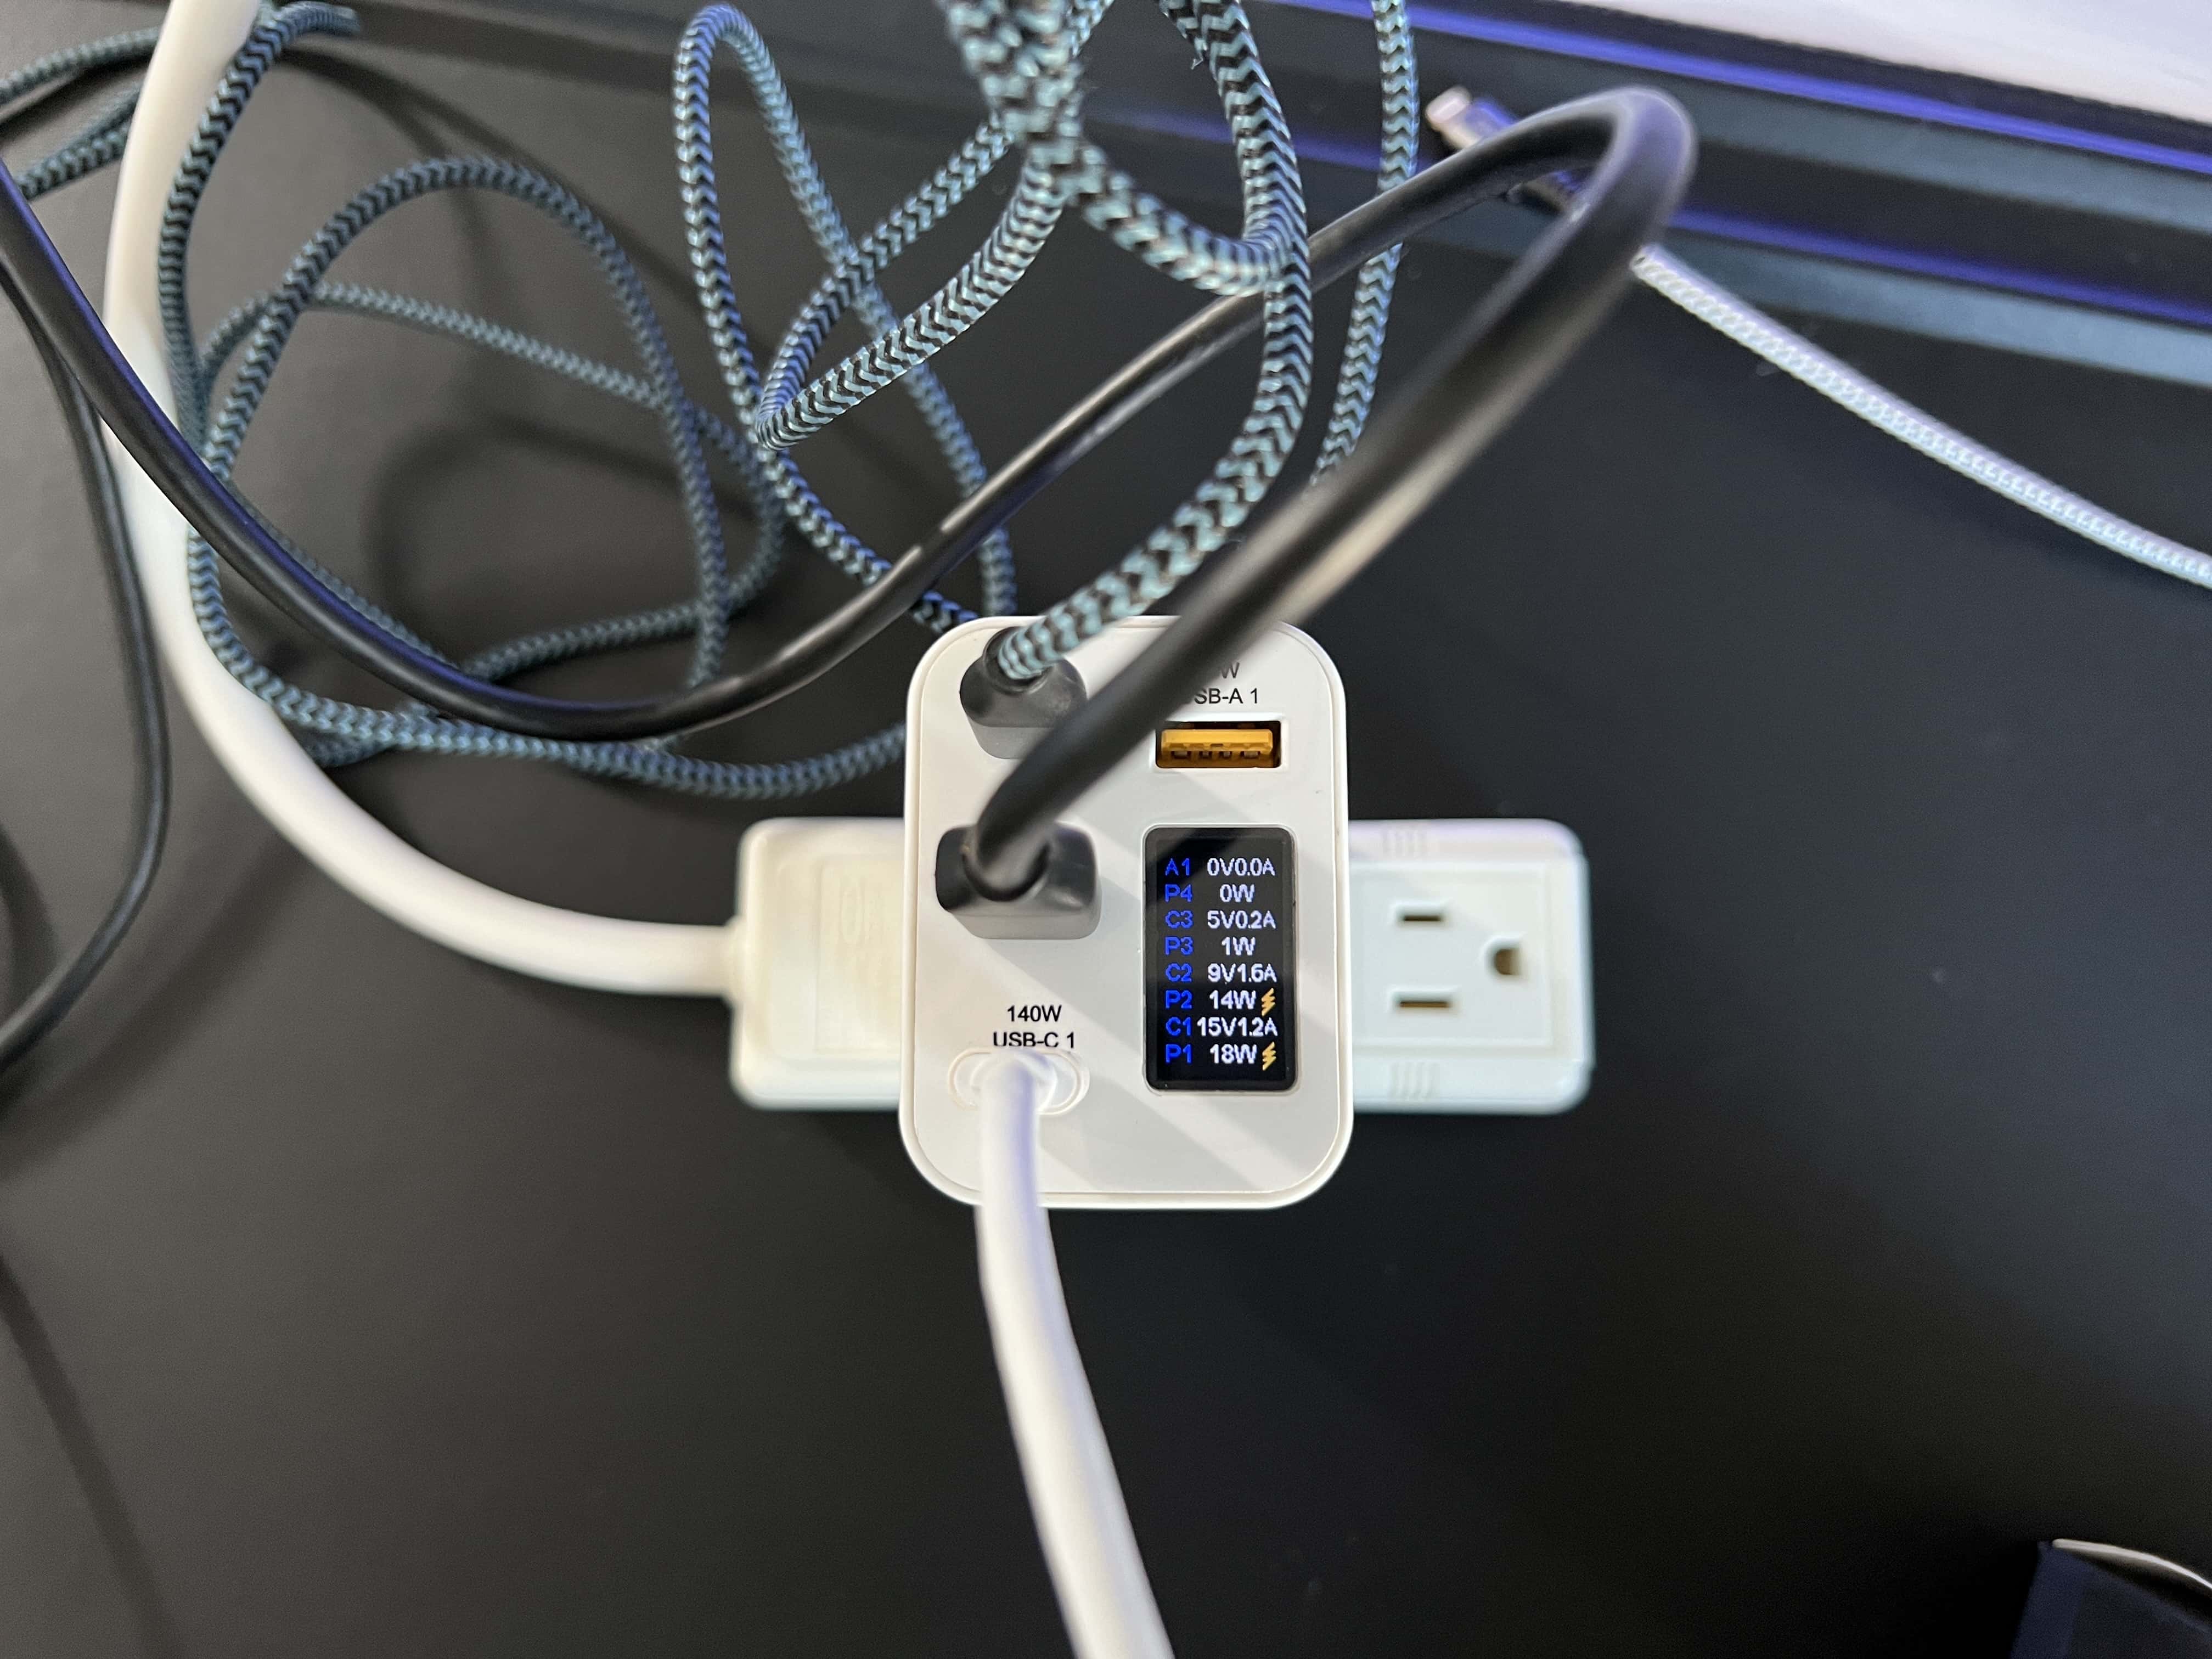 280W Zeus USB-C GaN Charger – Chargeasap